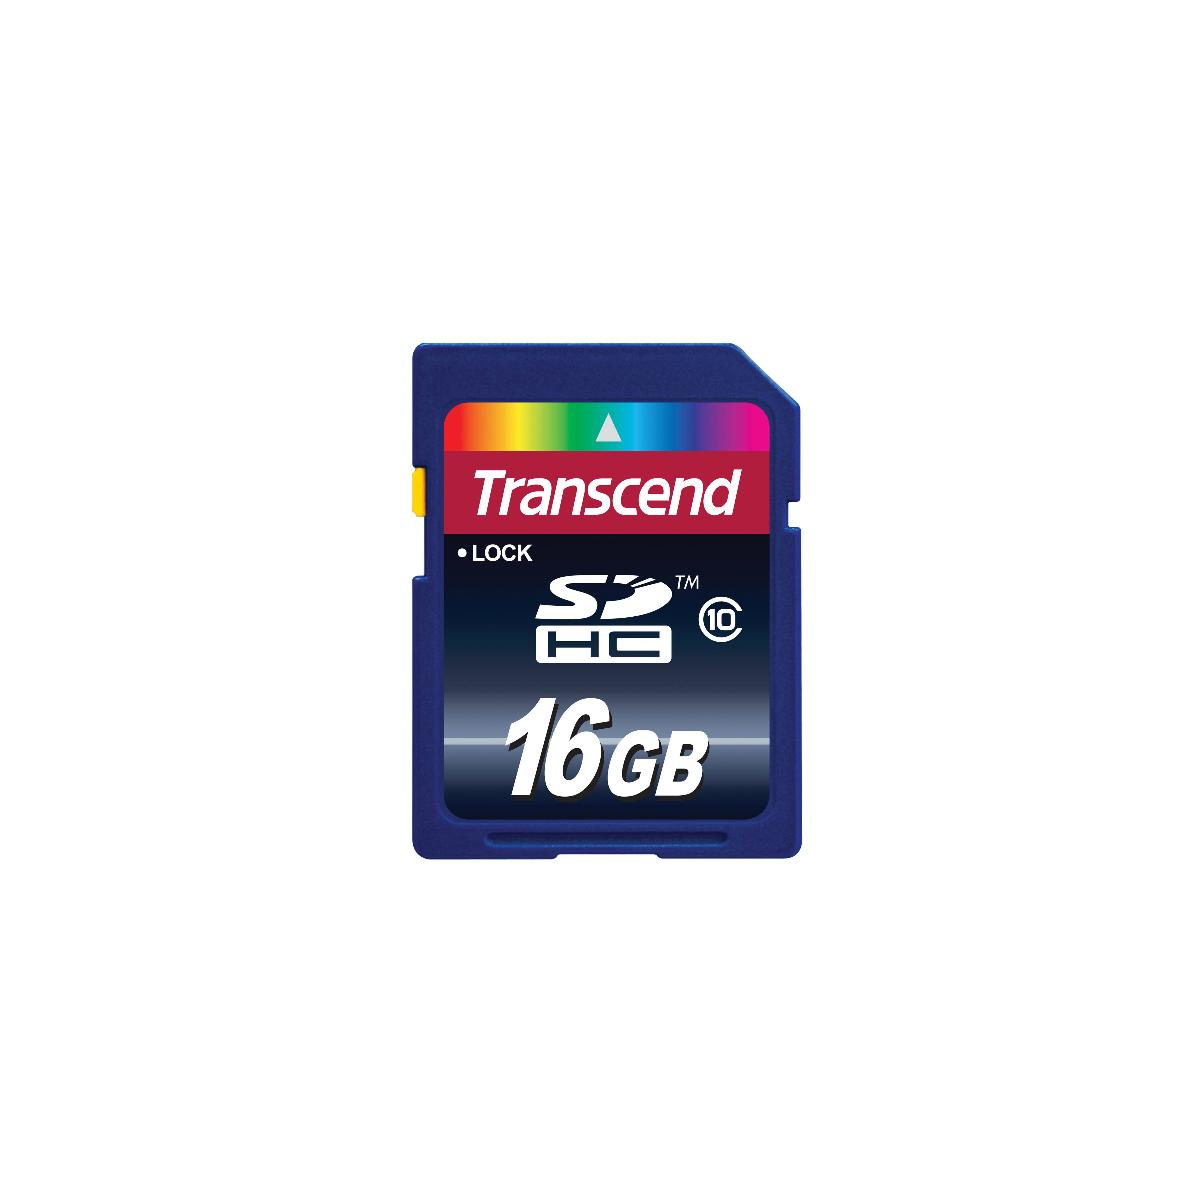 Speicherkarte, 20 TRANSCEND TS16GSDHC10, GB, SDHC 16 MB/s